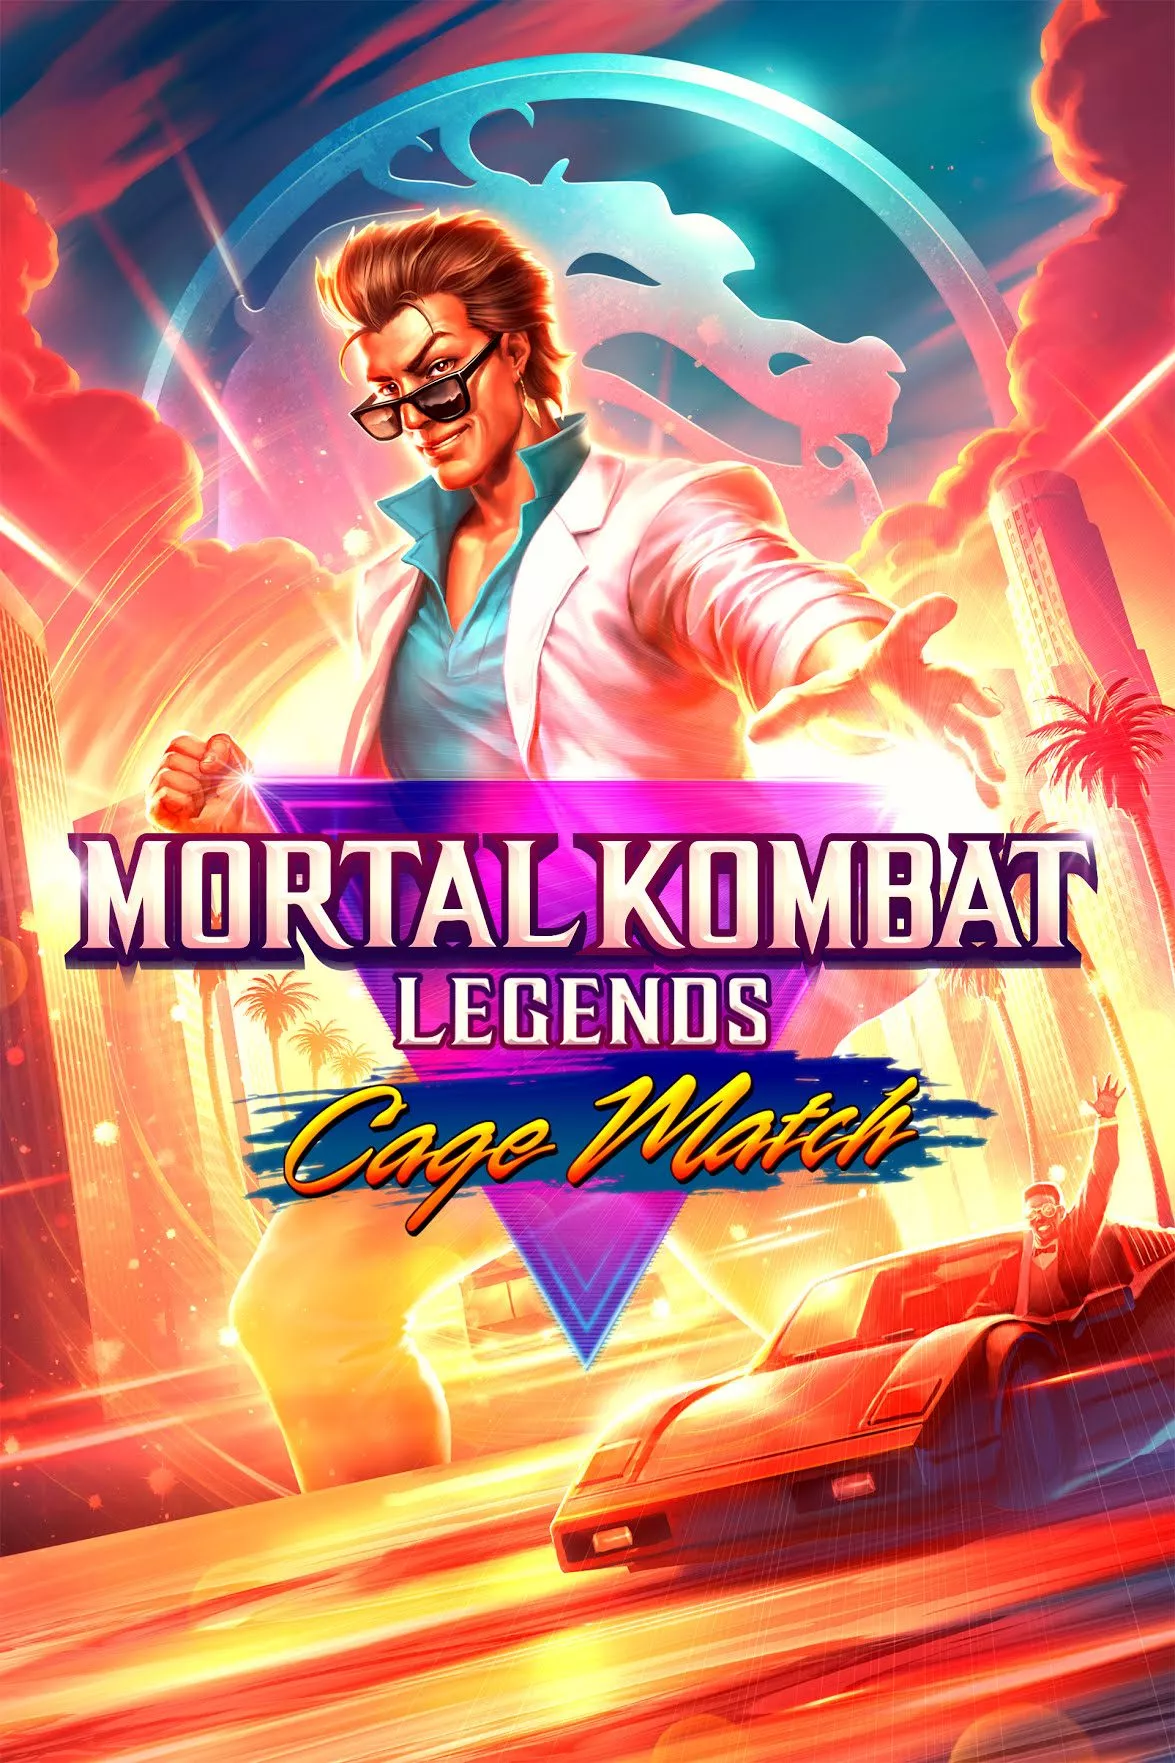 Mortal Kombat Legends: Cage Match HBO Max